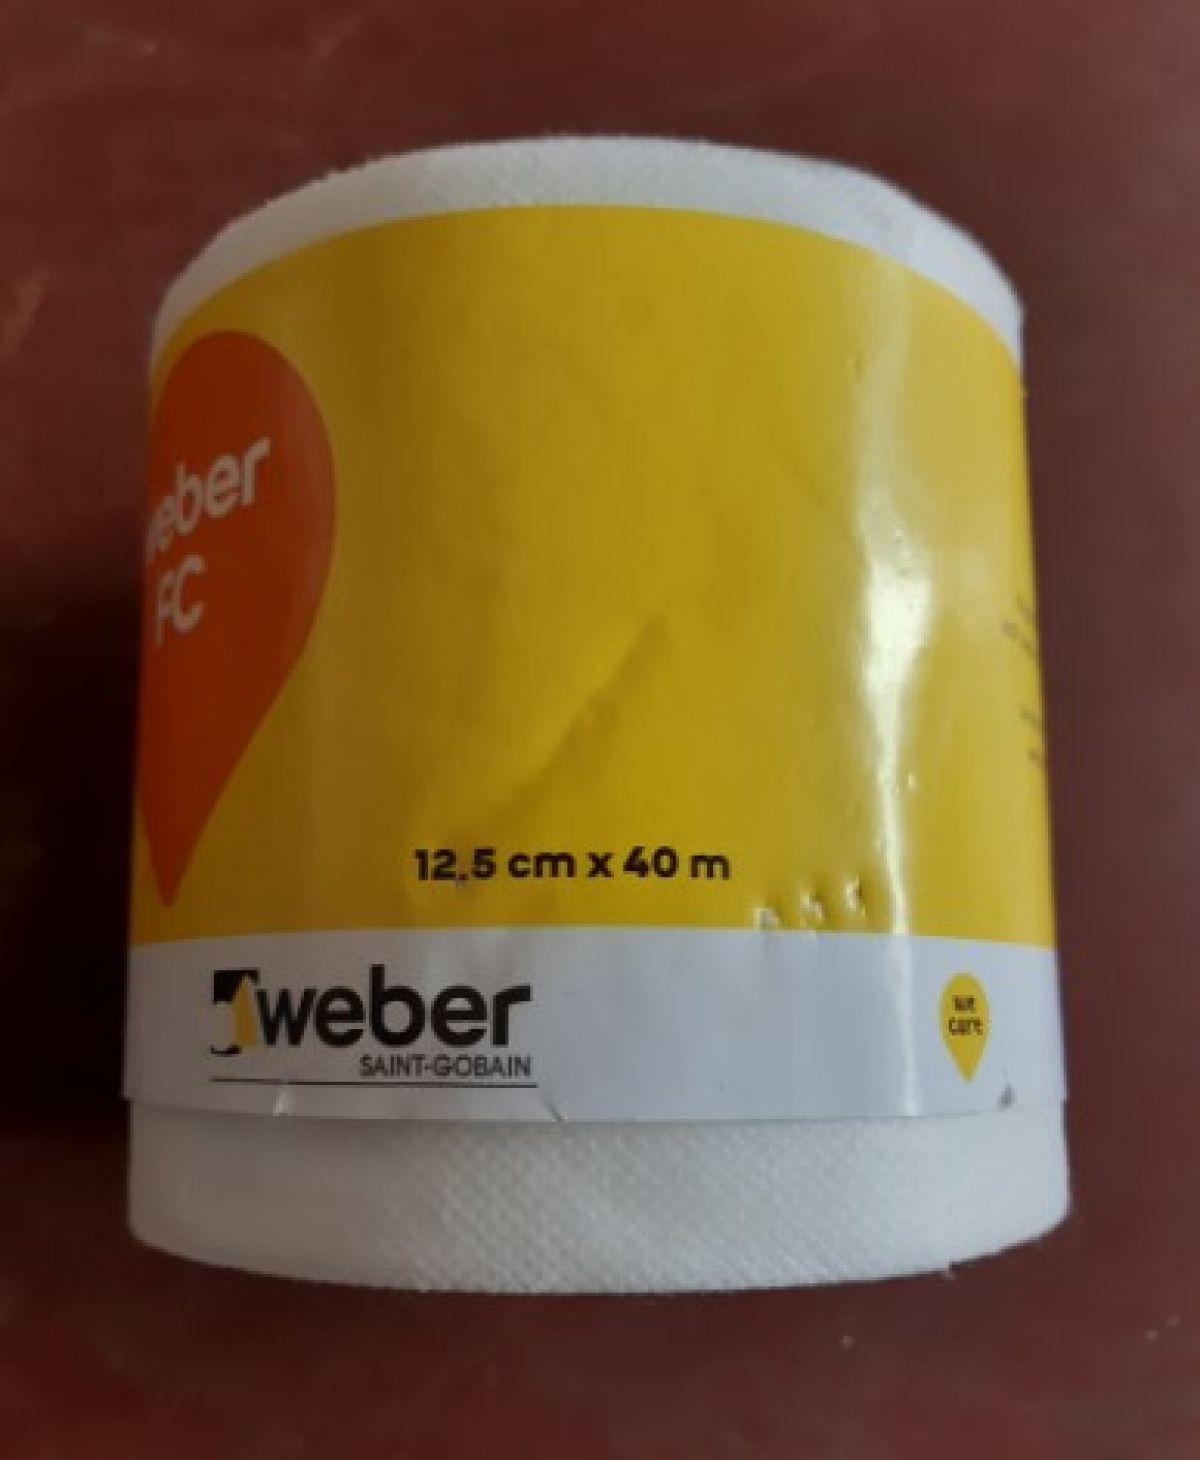 weber 12,5 cm x 40 m